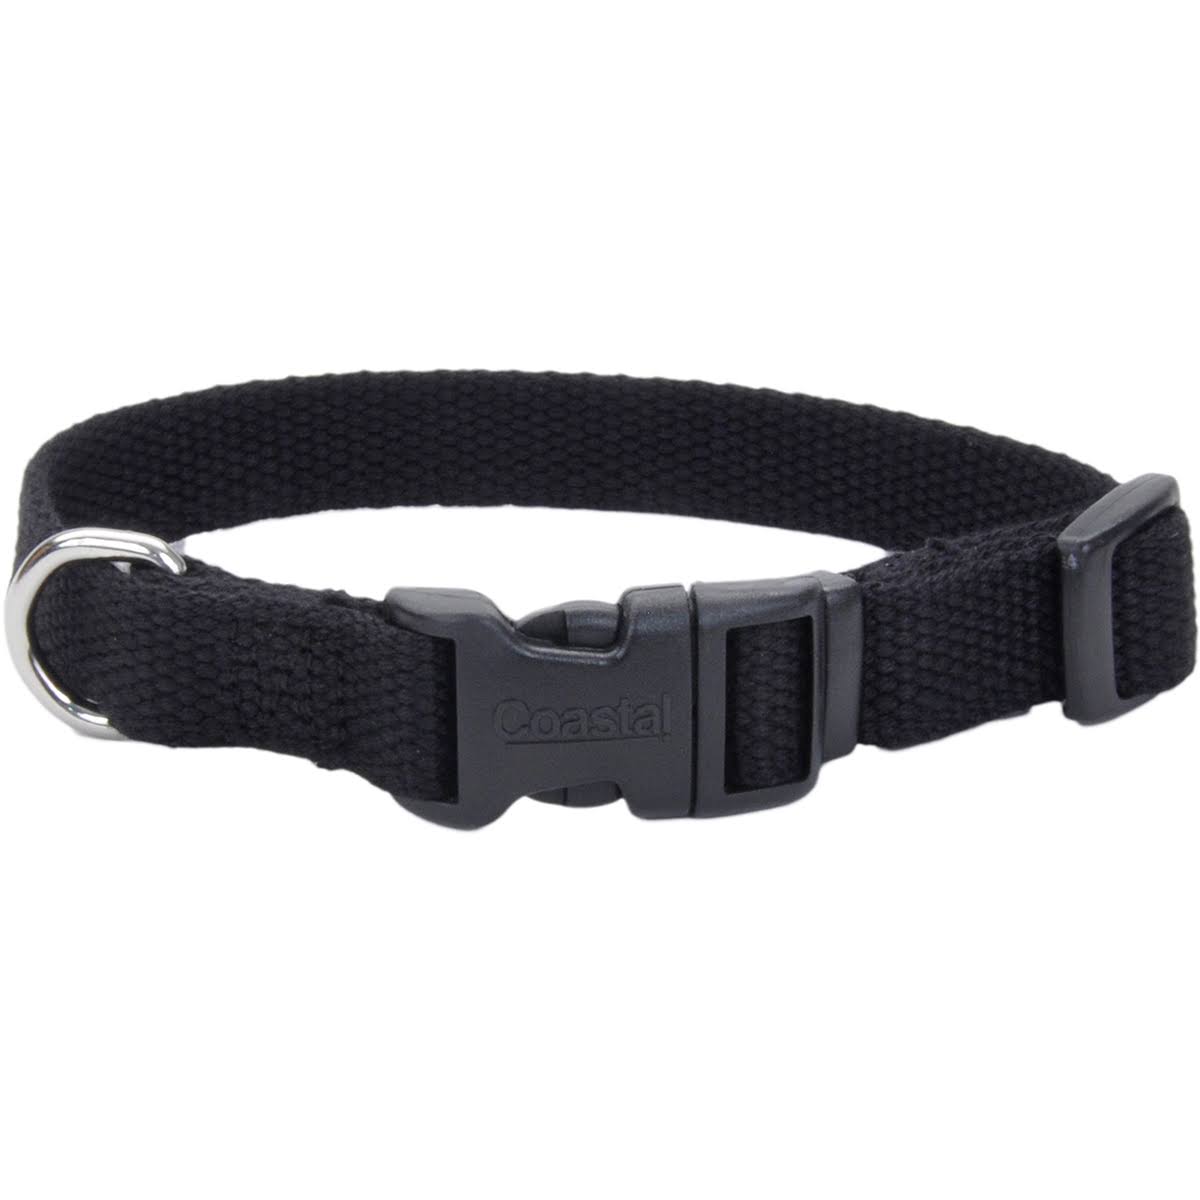 Coastal Soy 1.6cm Adjustable Dog Collar